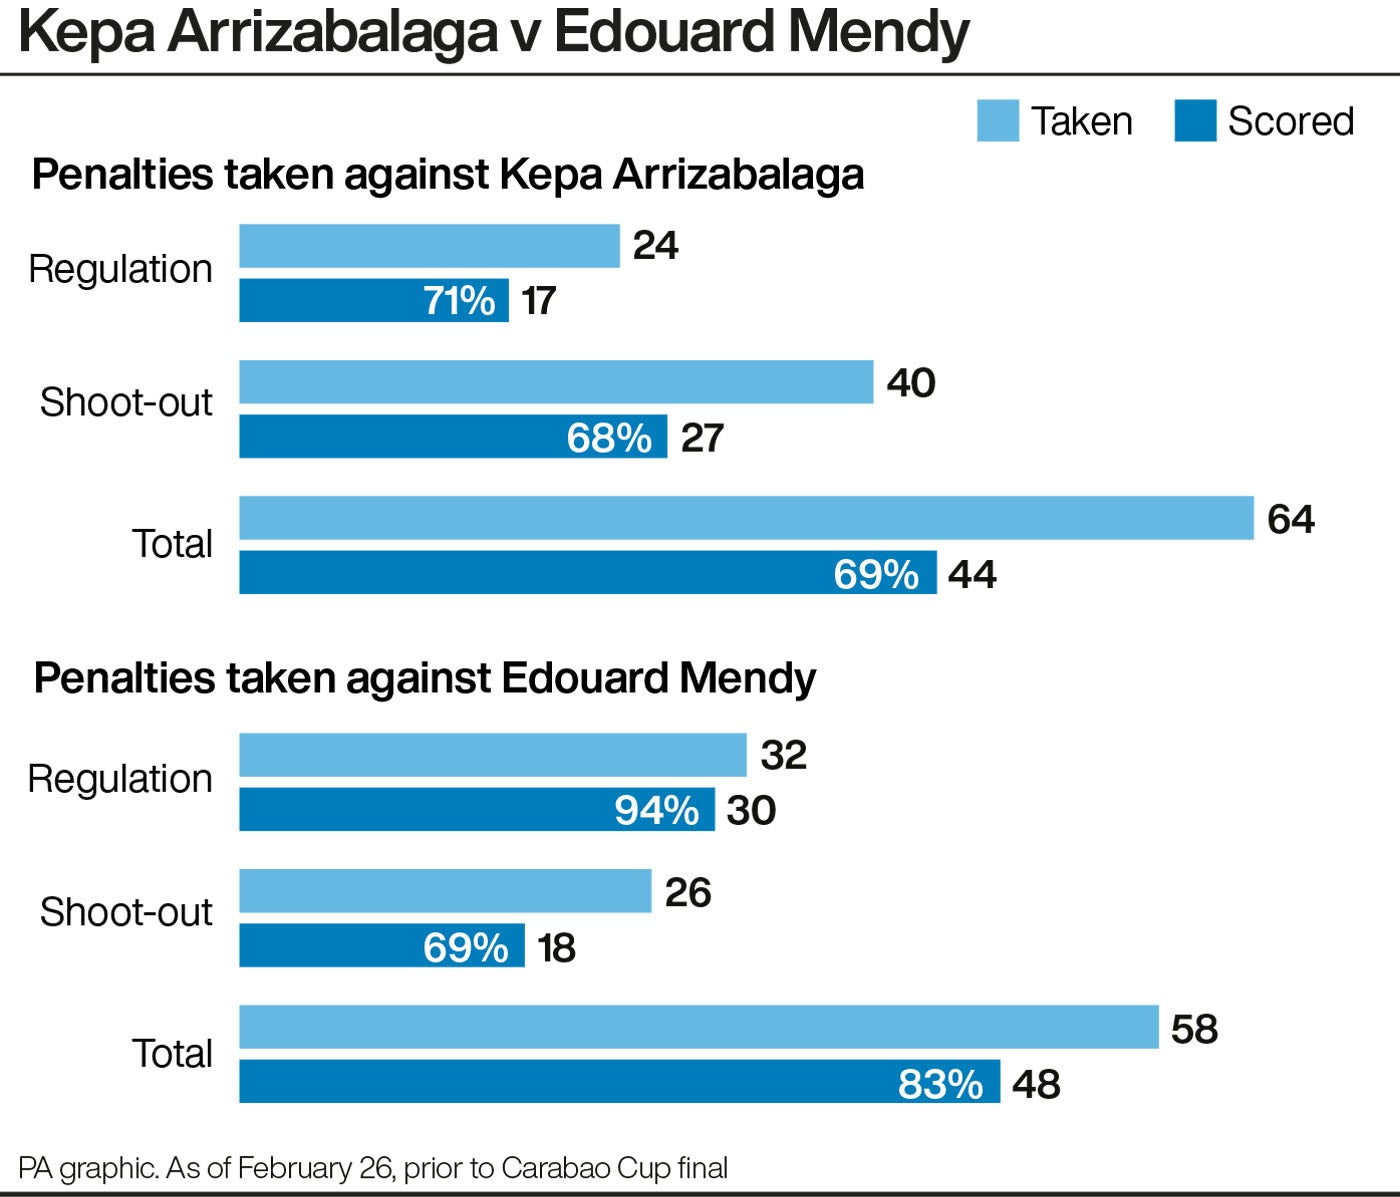 Kepa Arrizabalaga had a strong penalty record before his Carabao Cup nightmare (PA graphic)